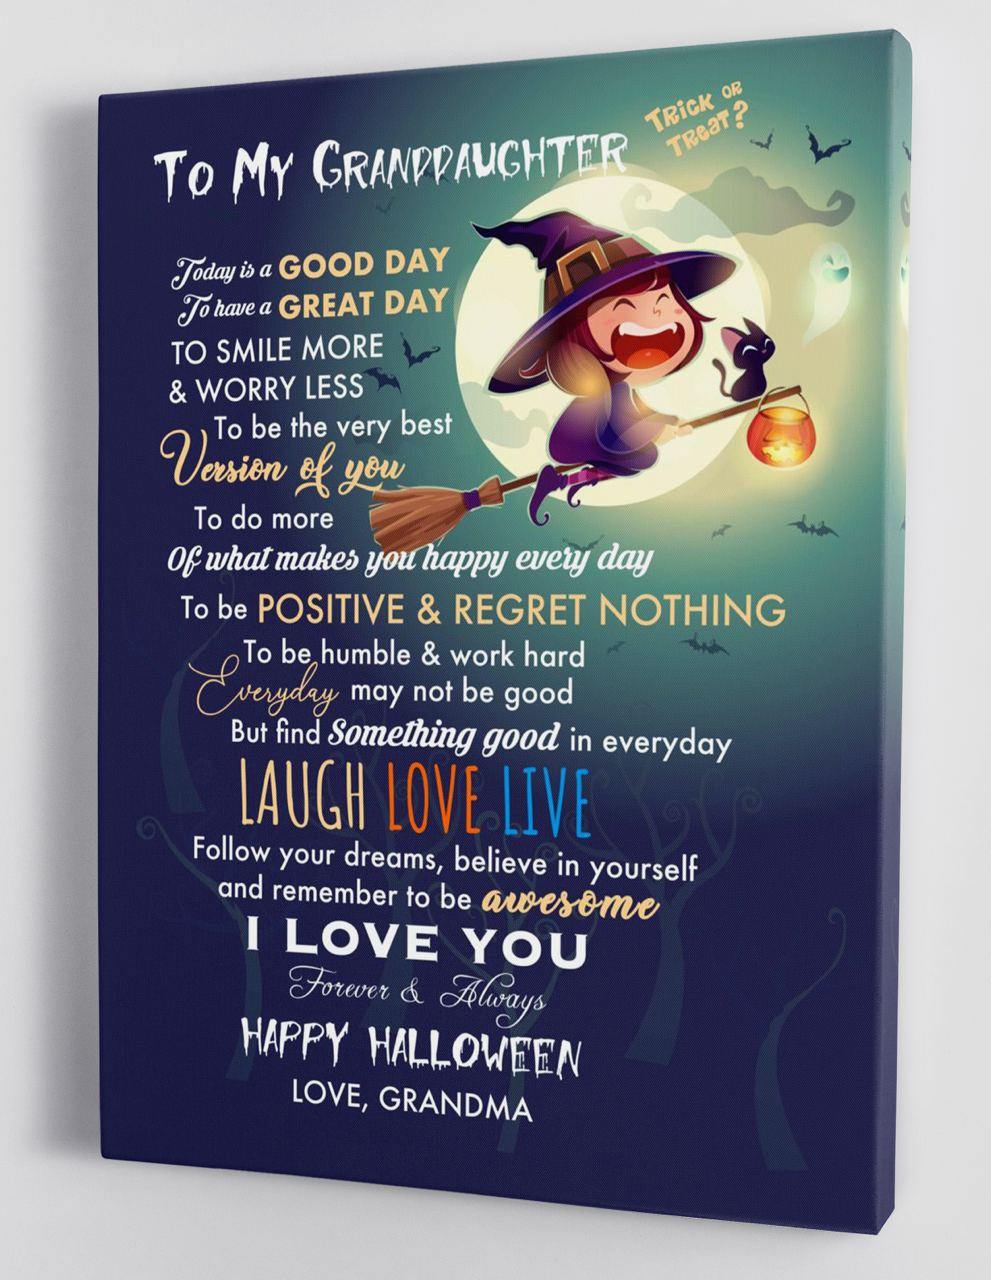 To My Granddaughter - From Grandma - Halloween Canvas Gift GMD066 - DivesArt LLC